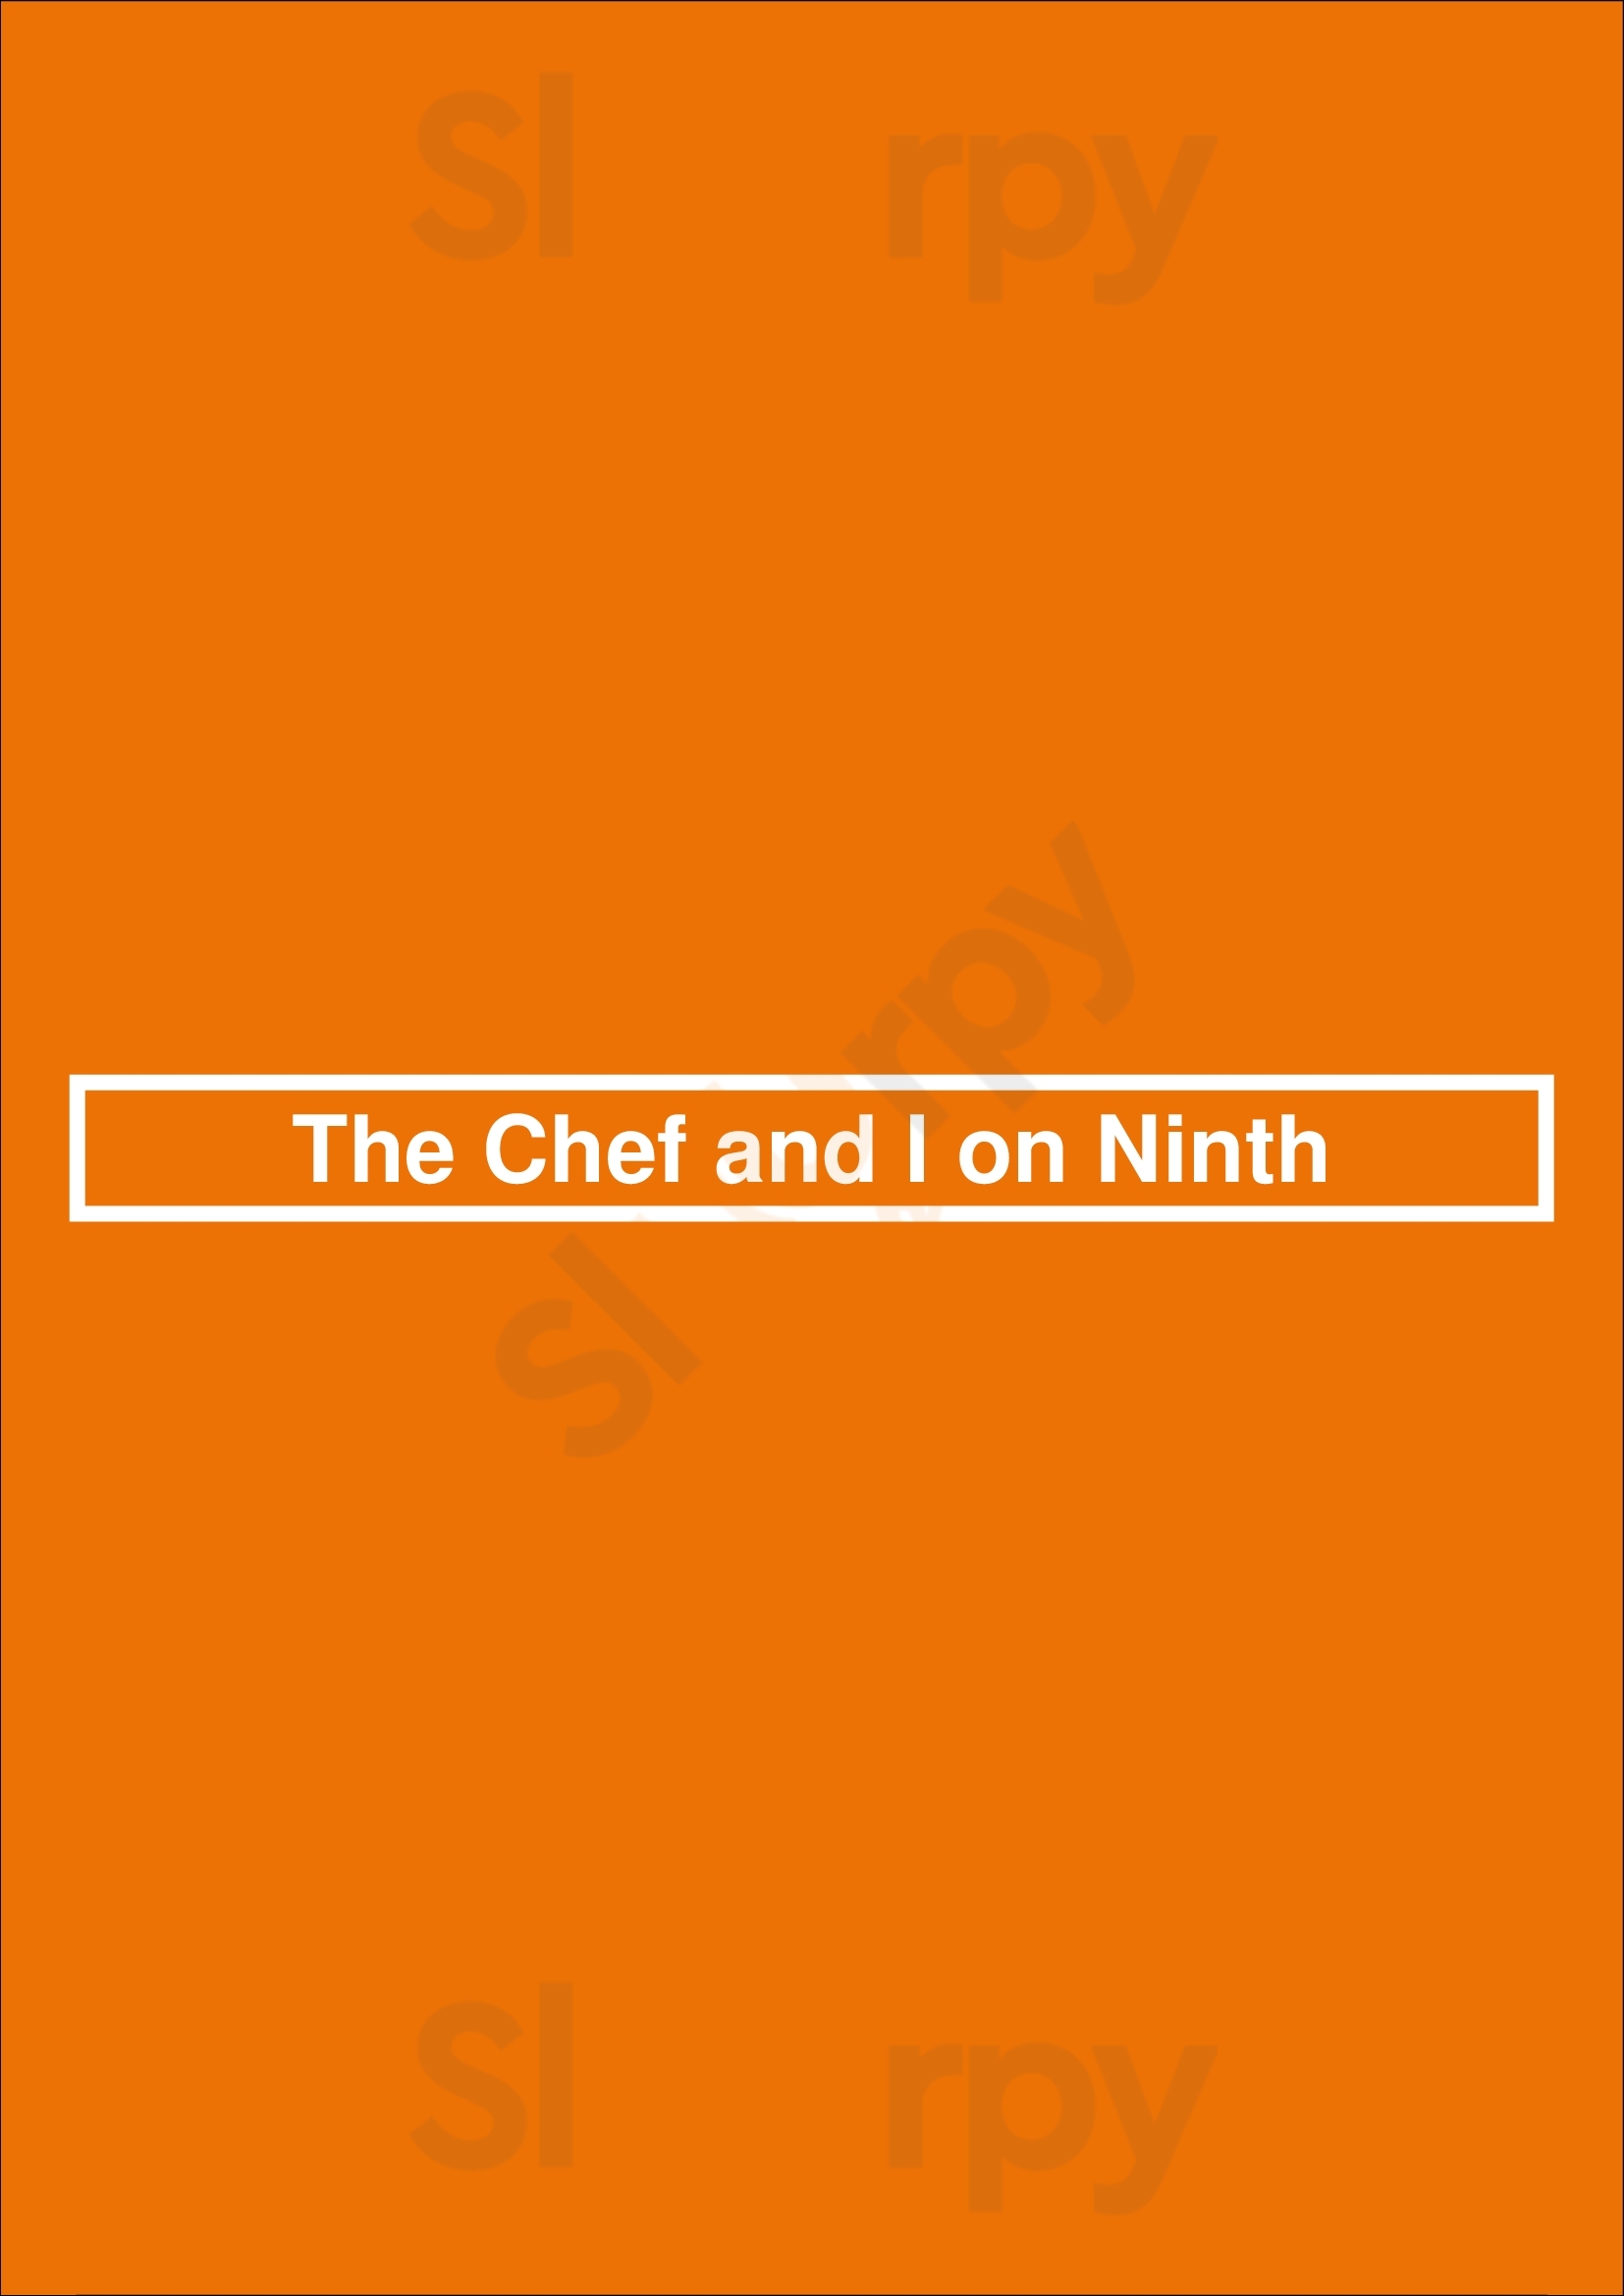 The Chef And I Nashville Menu - 1